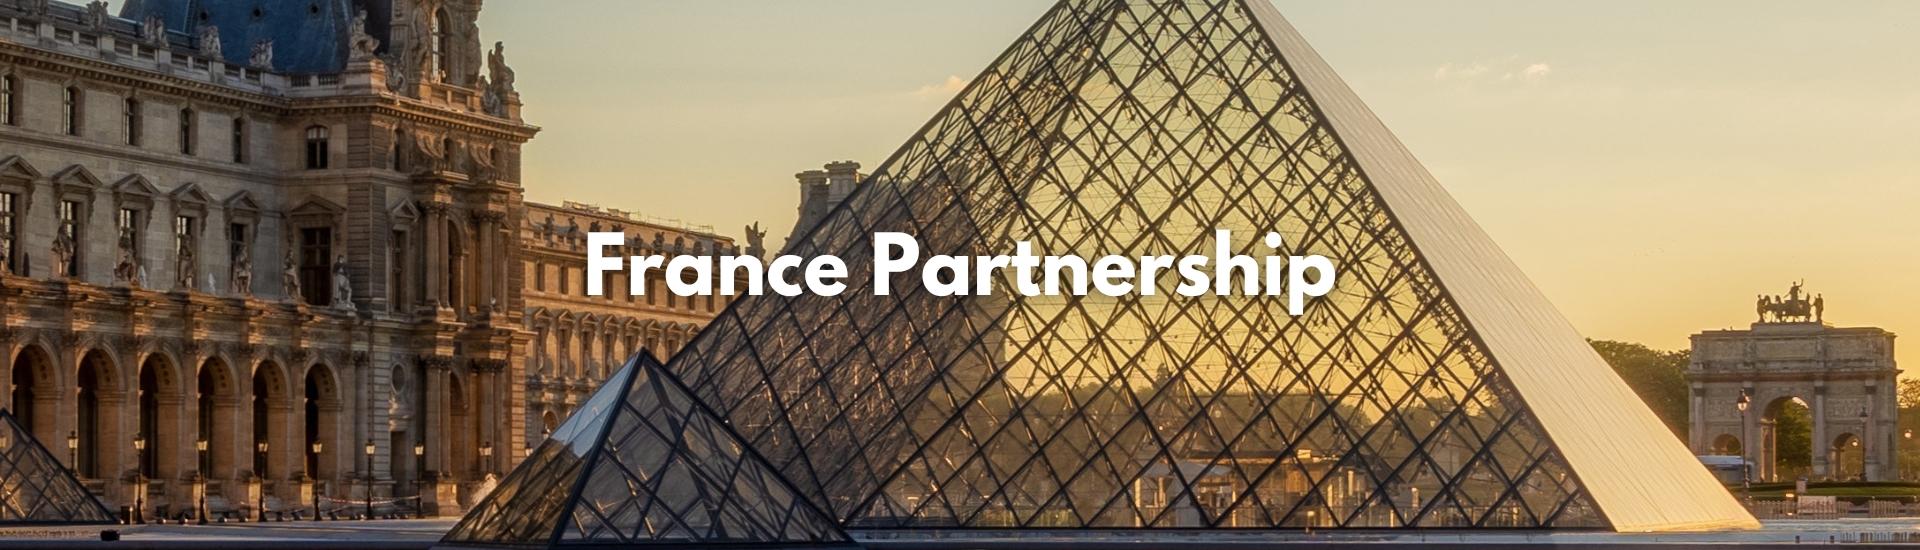 France Partnership Banner